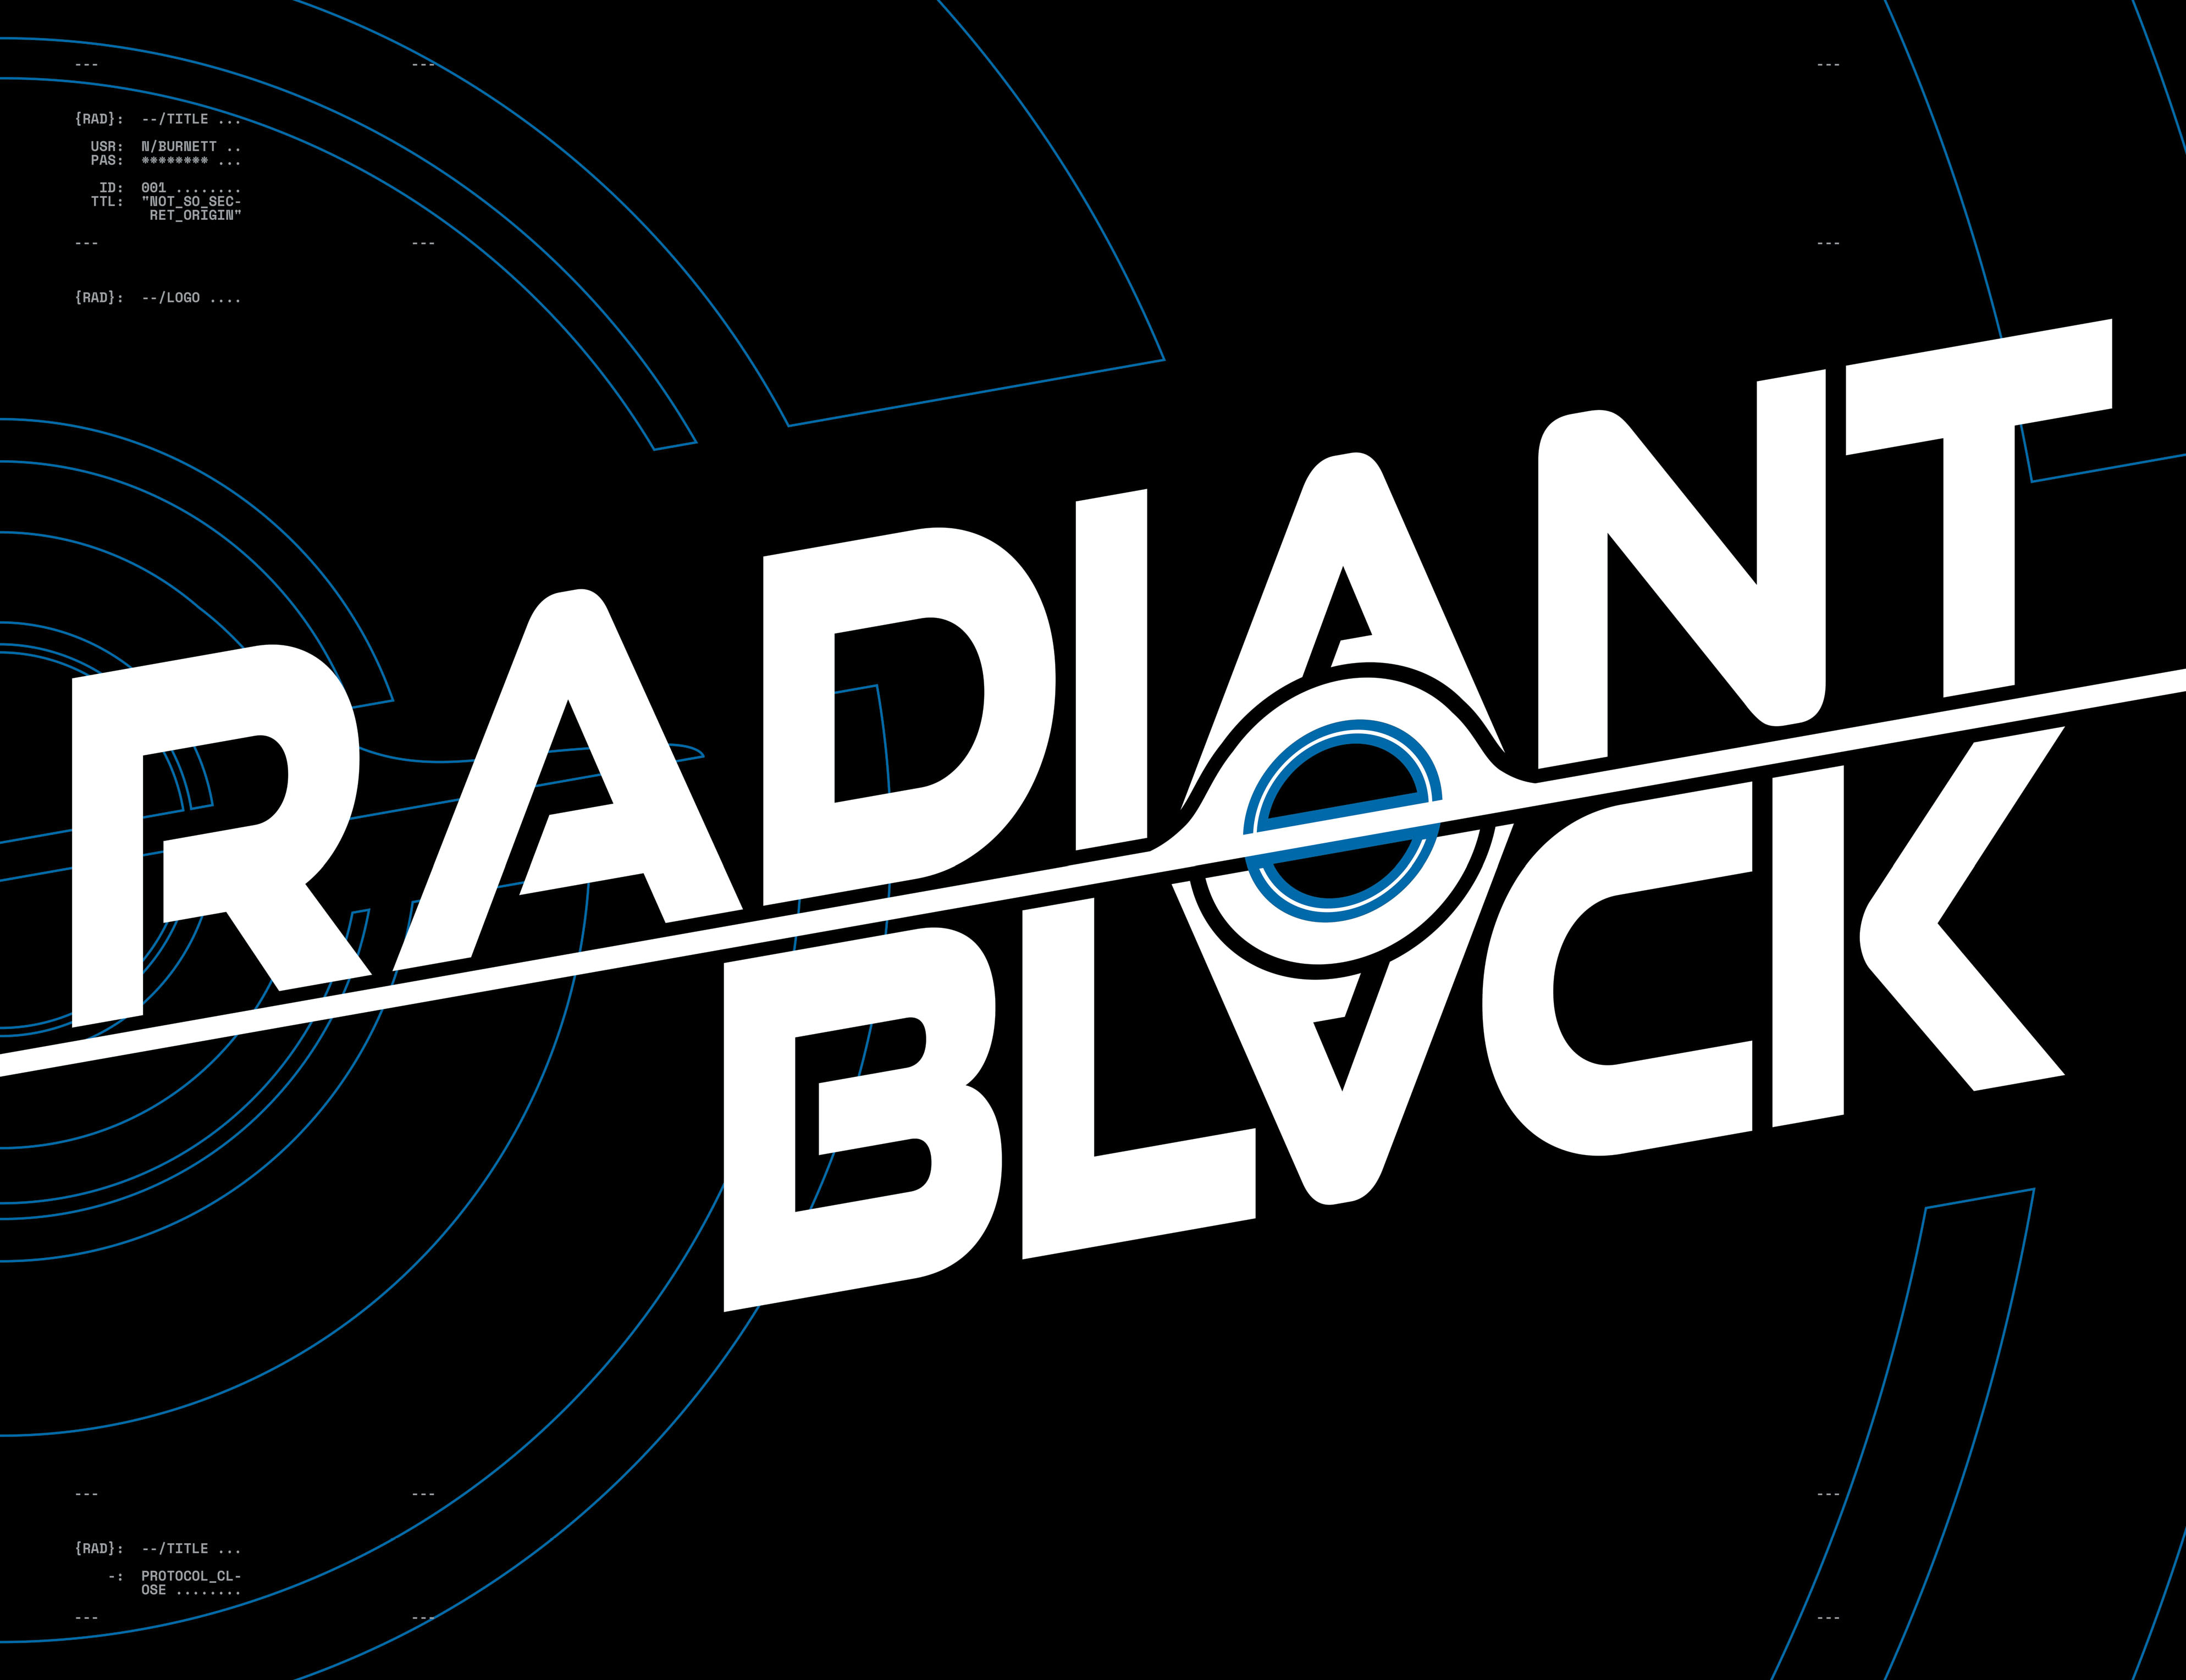 radiant black issue 2